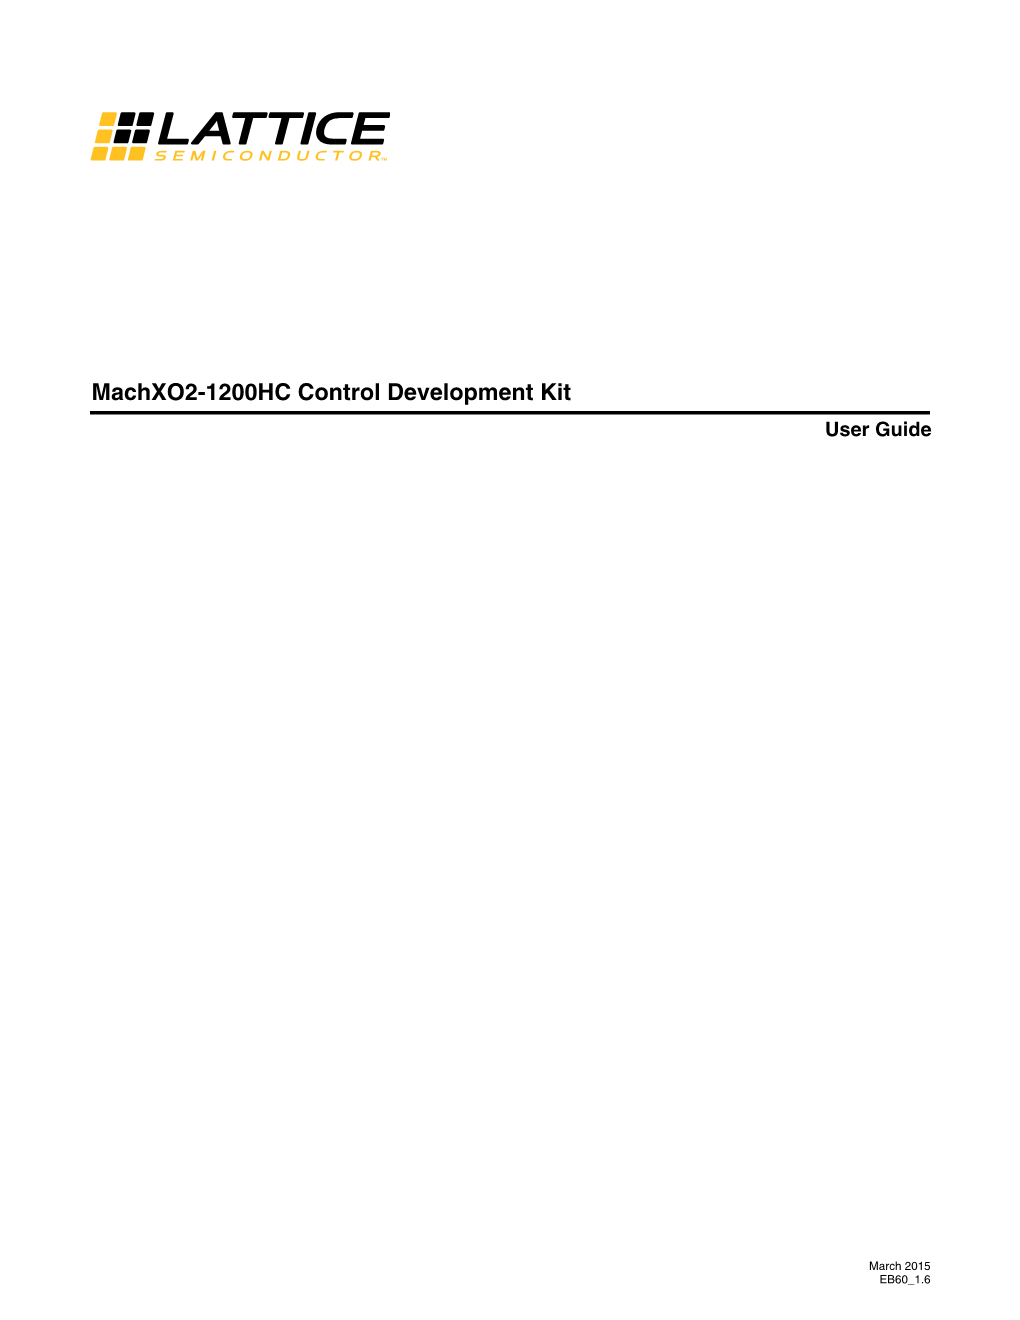 Machxo2-1200HC Control Development Kit User's Guide